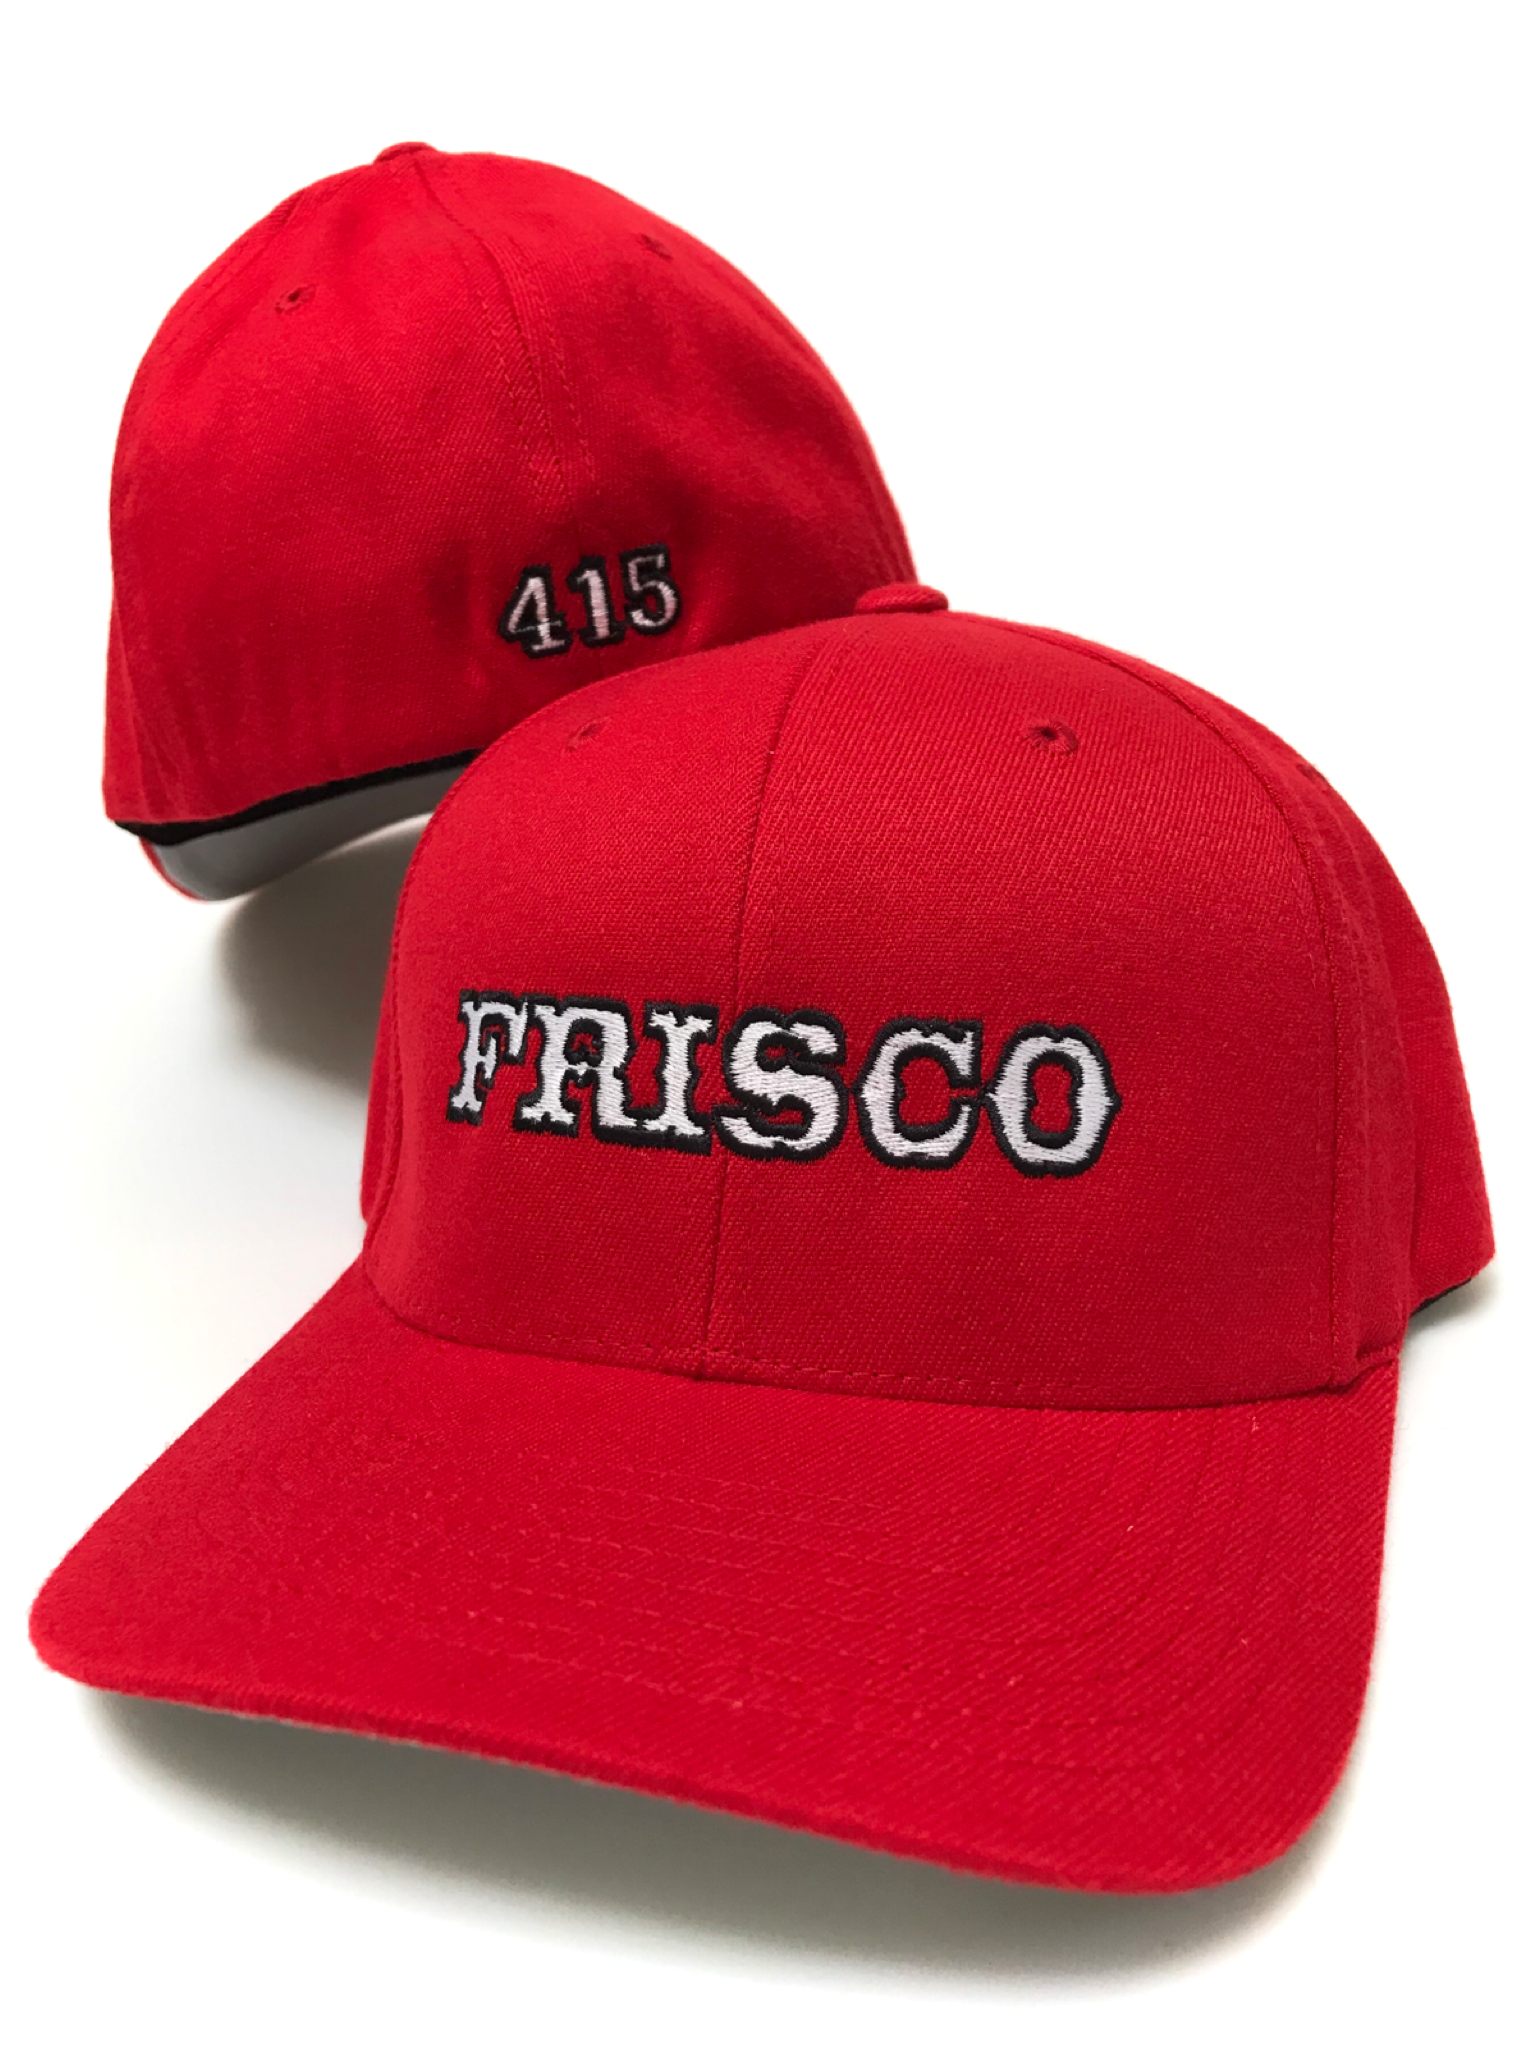 Frisco Flex Fit - 415 Clothing,